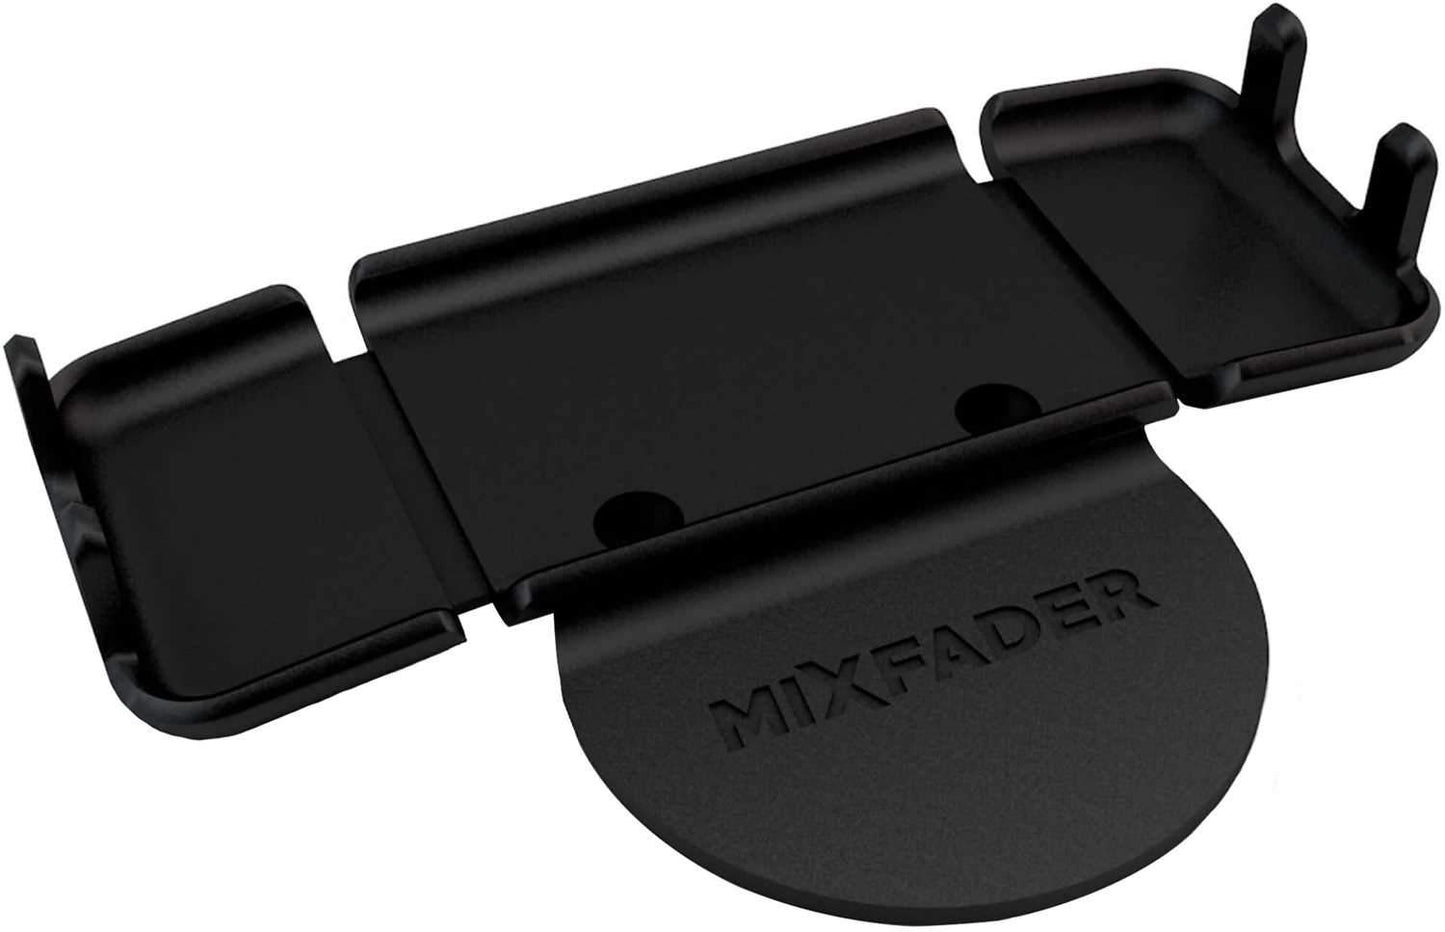 MWM Mixfader Dock for Numark PT01 Scratch - ProSound and Stage Lighting